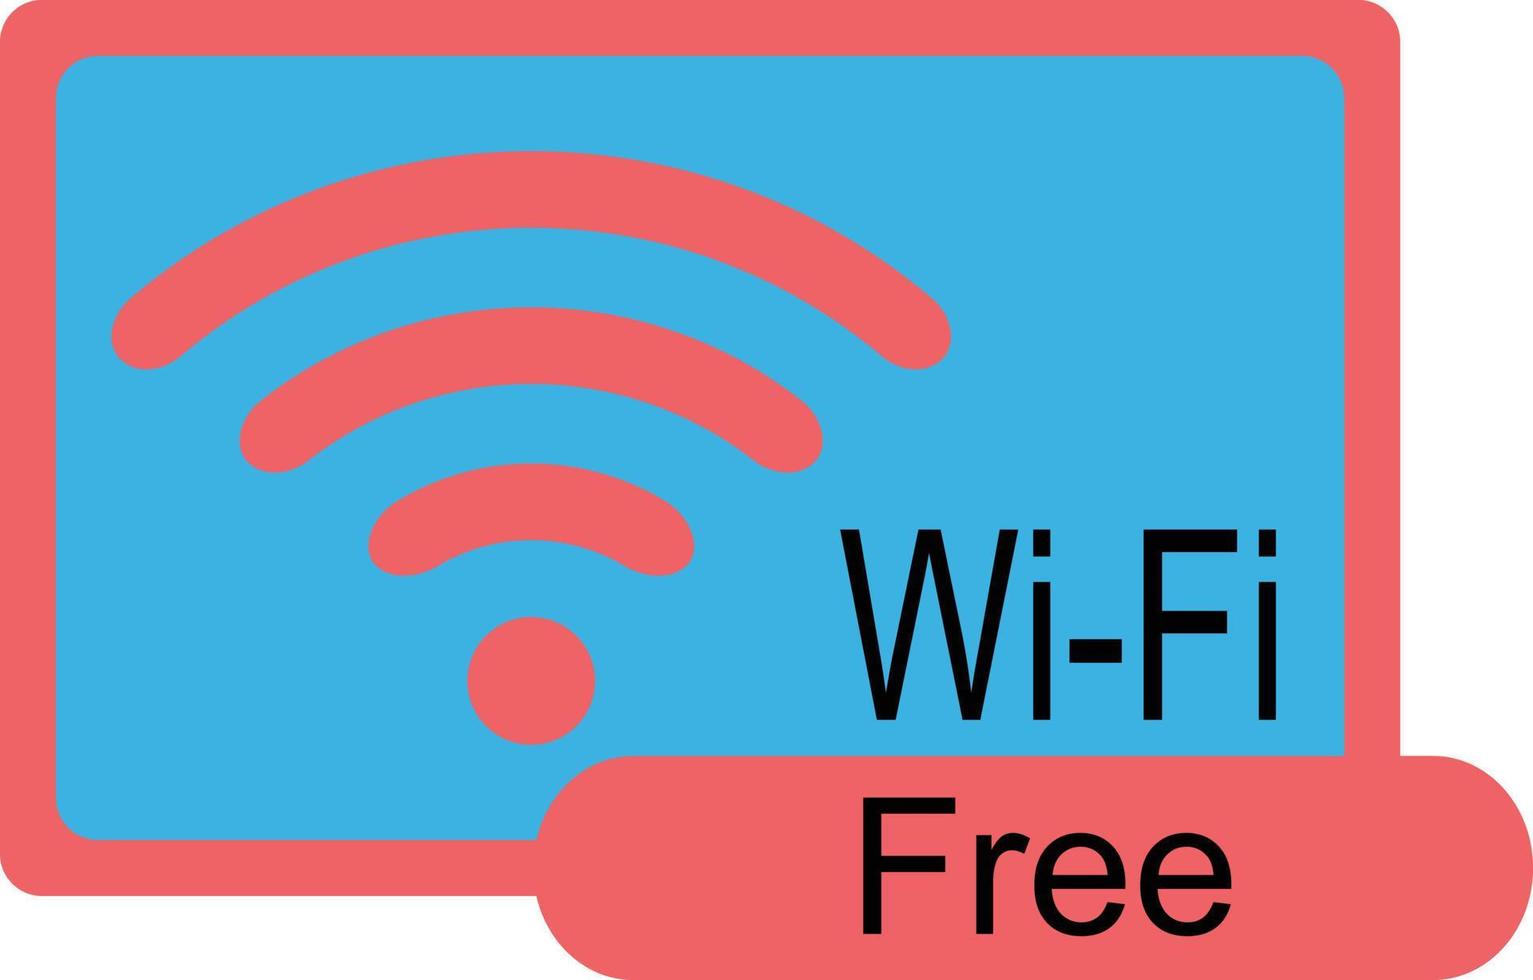 icono de wi-fi gratis de estilo plano. símbolo de red para conexión a Internet. vector